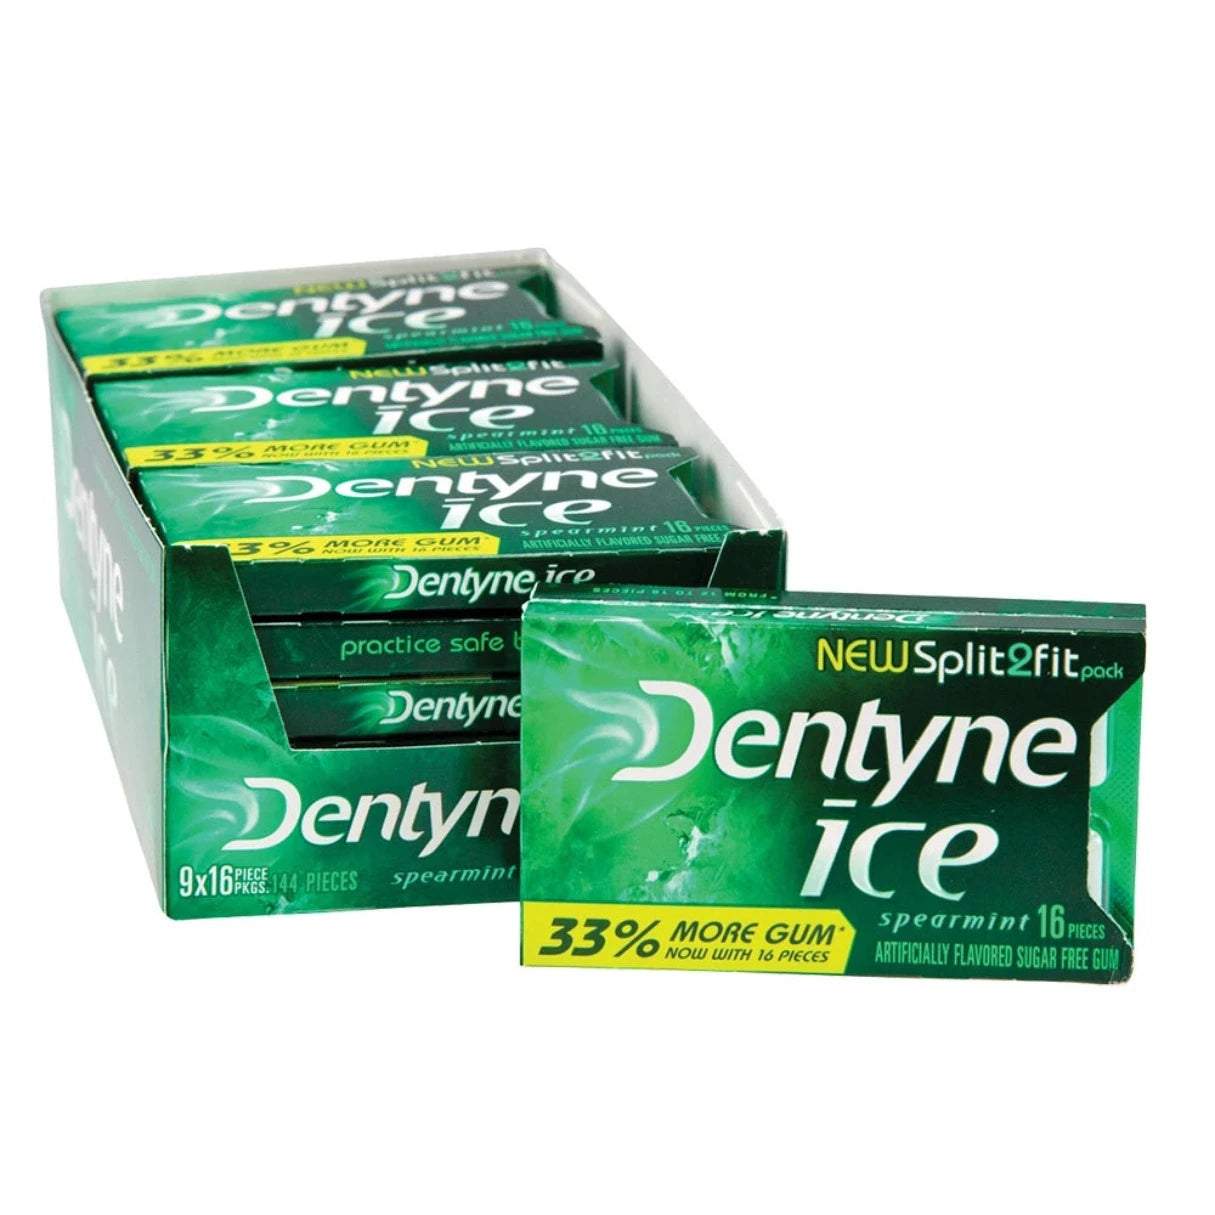 Dentyne Ice Sugarless Gum Spearmint - 9ct